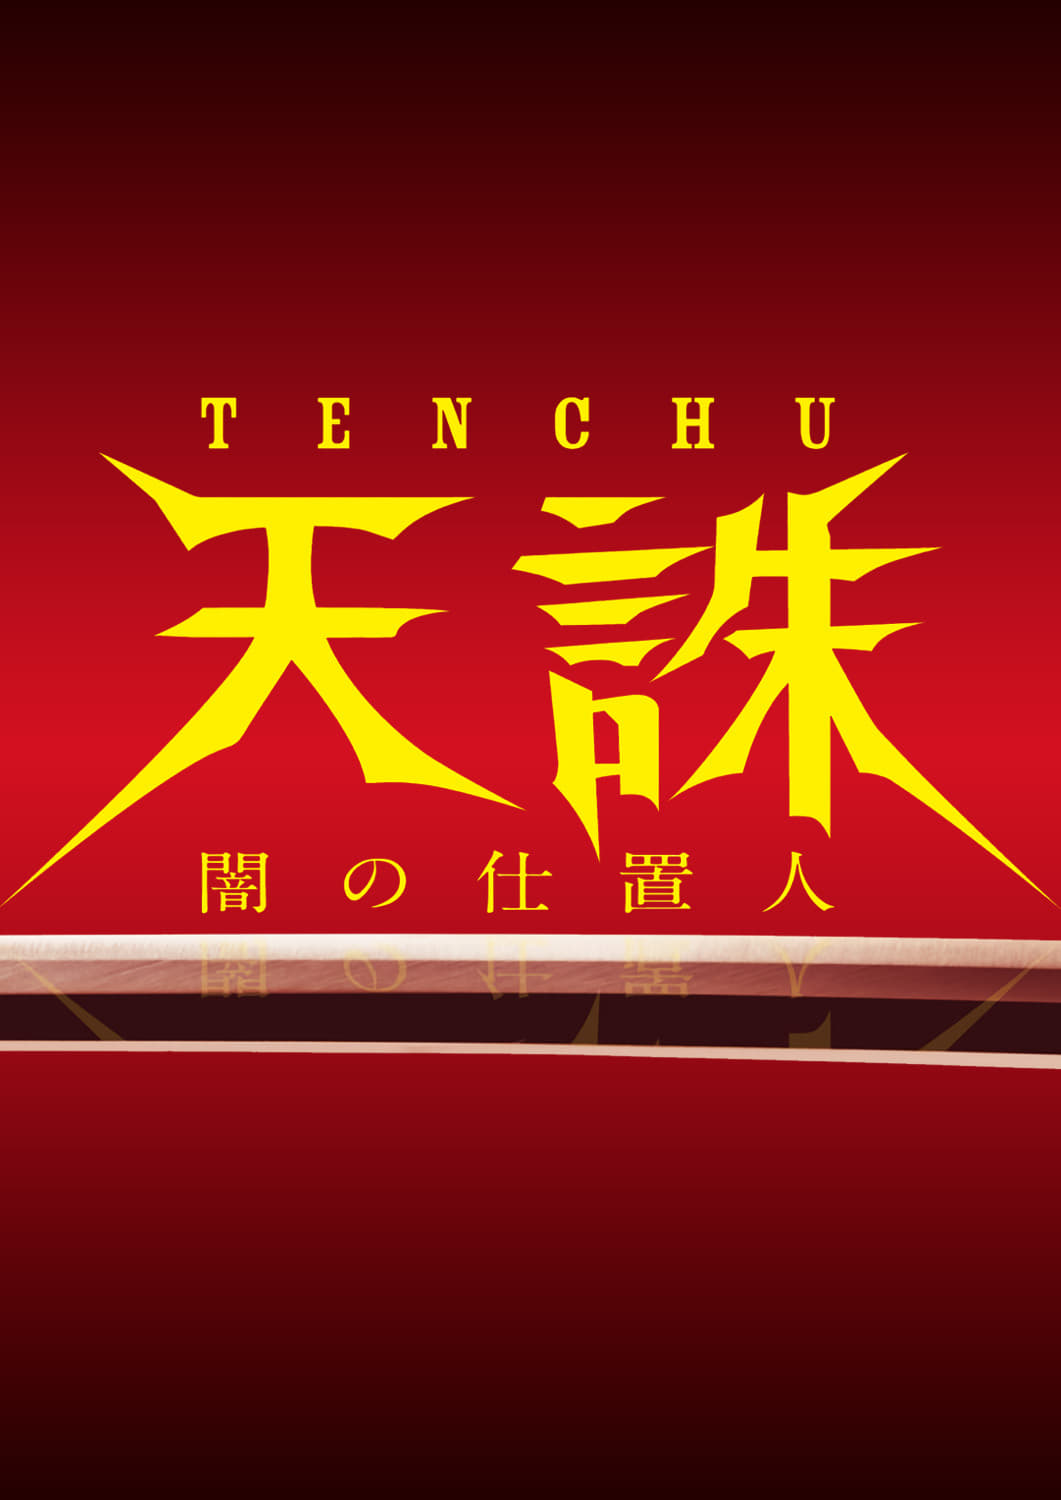 Tenchu: Ninja of Justice